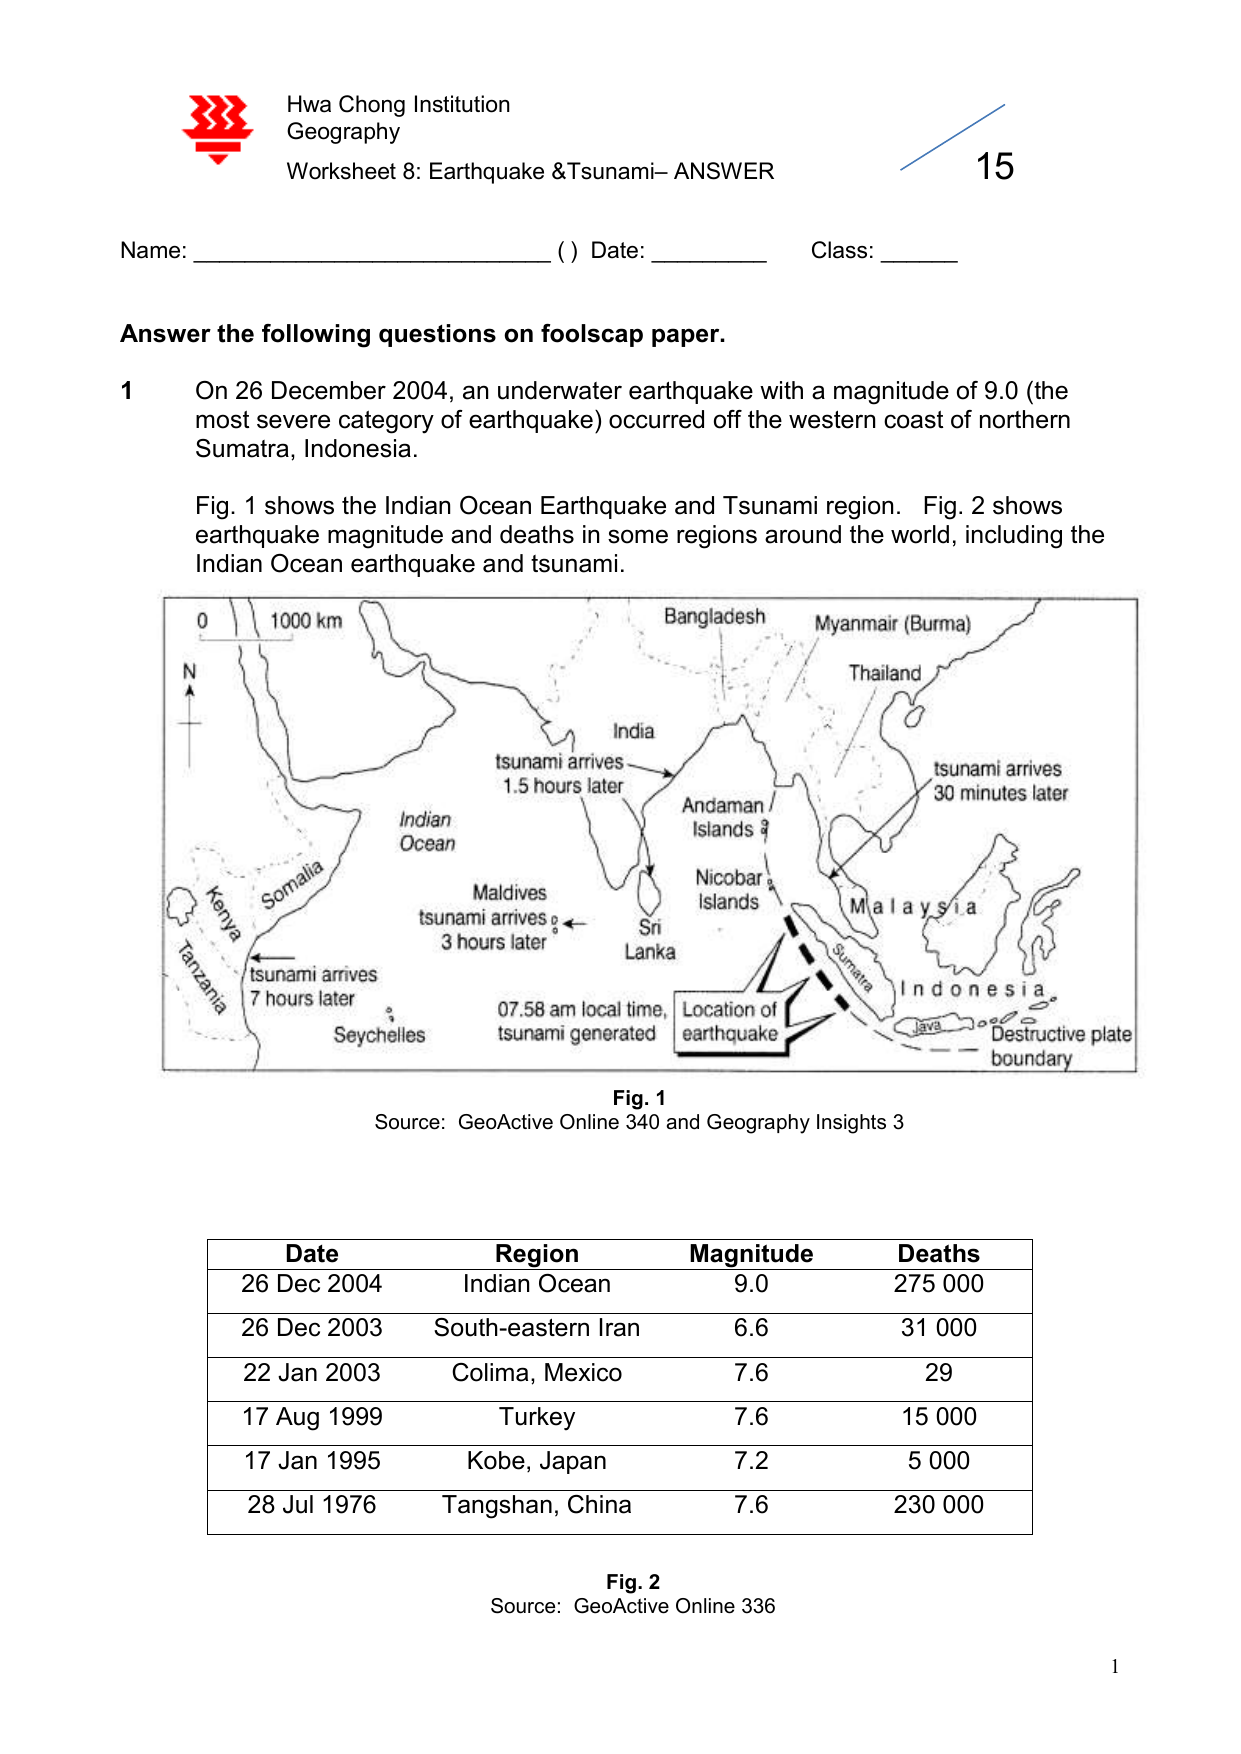 anatomy-of-an-earthquake-worksheet-answers-anatomy-worksheets